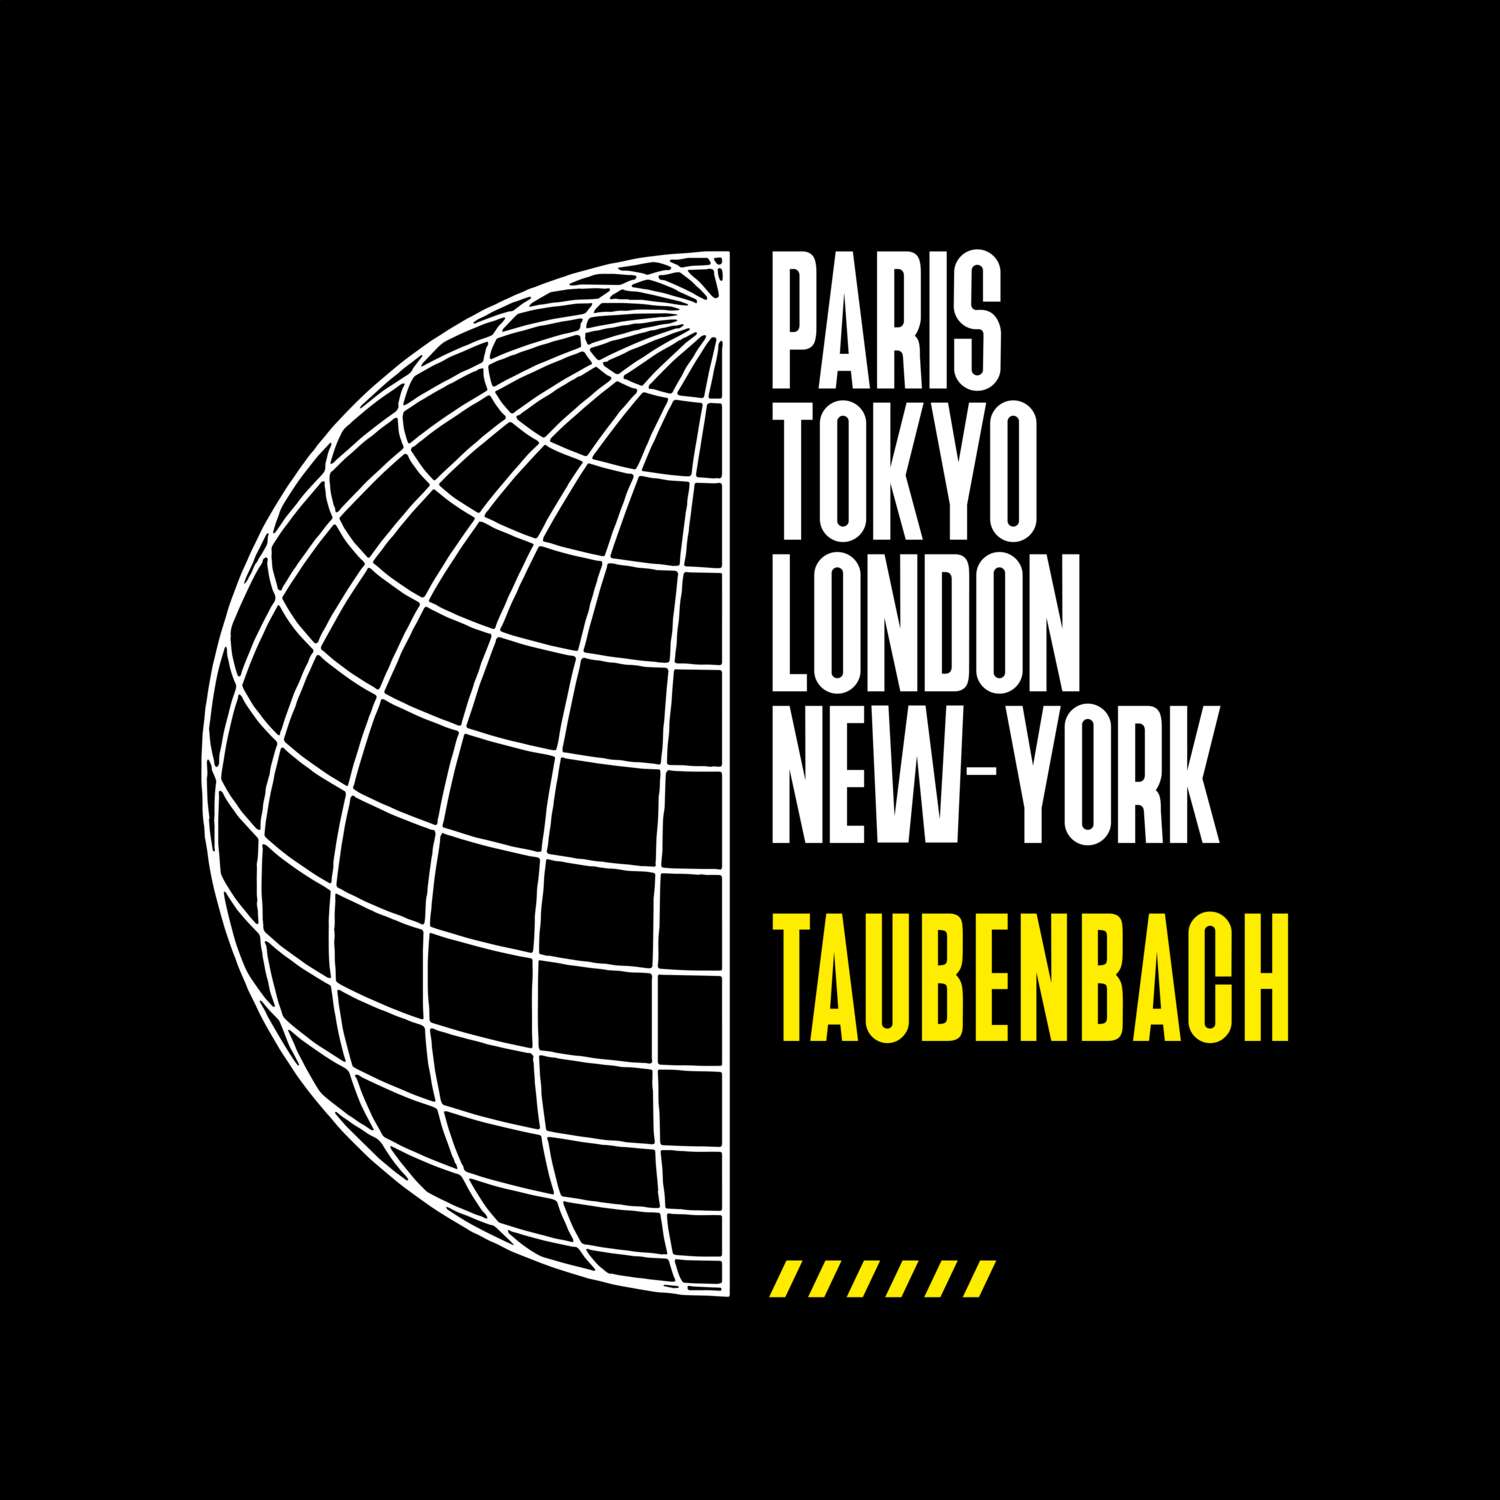 Taubenbach T-Shirt »Paris Tokyo London«